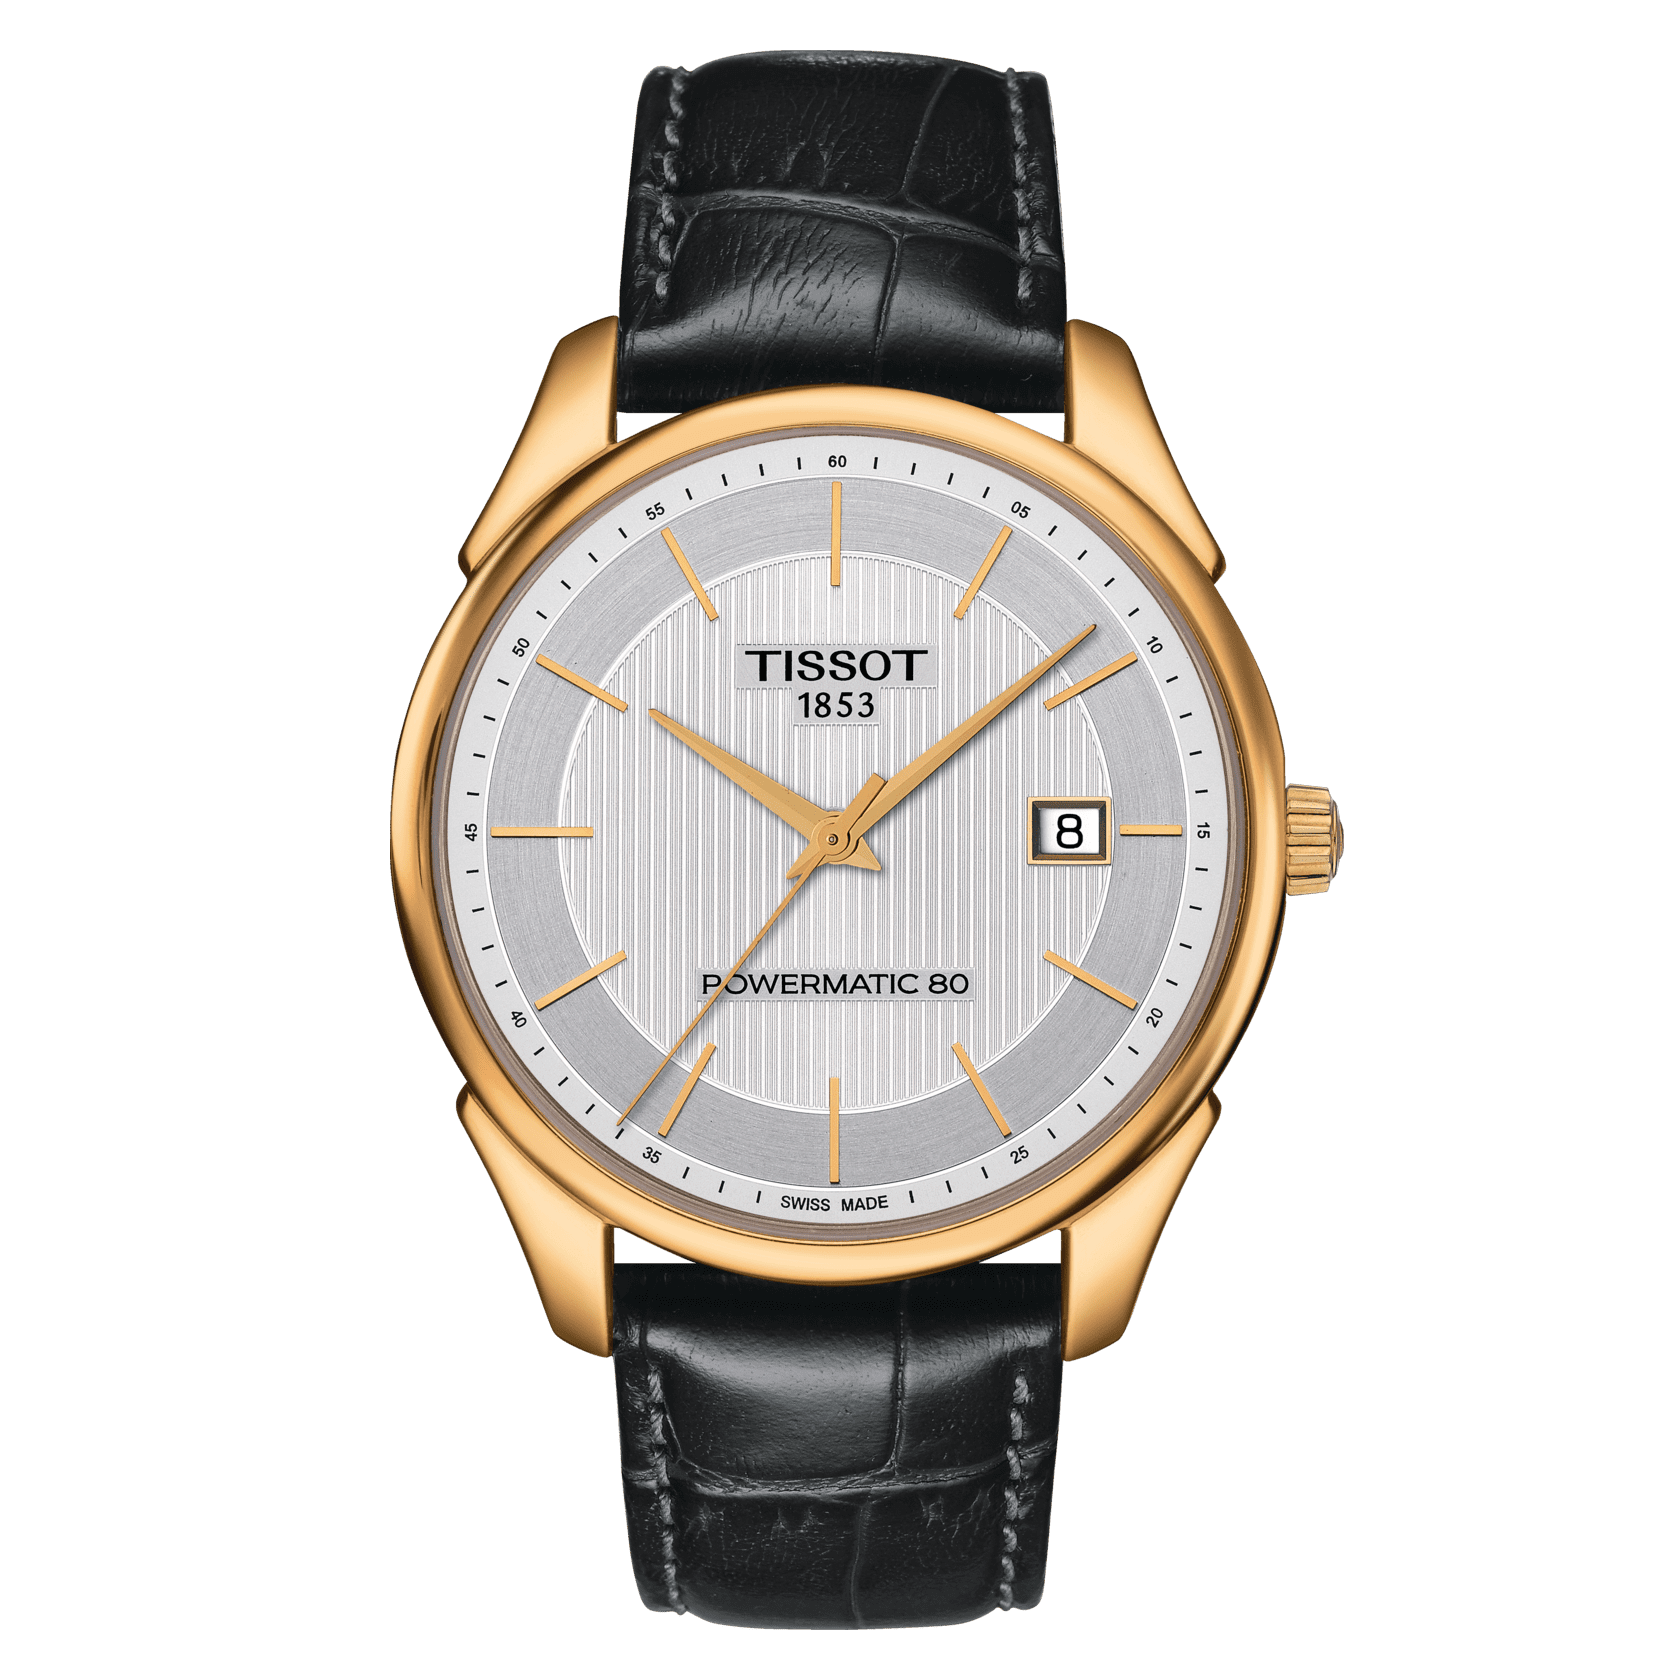 Romain Jerome Replica Watches